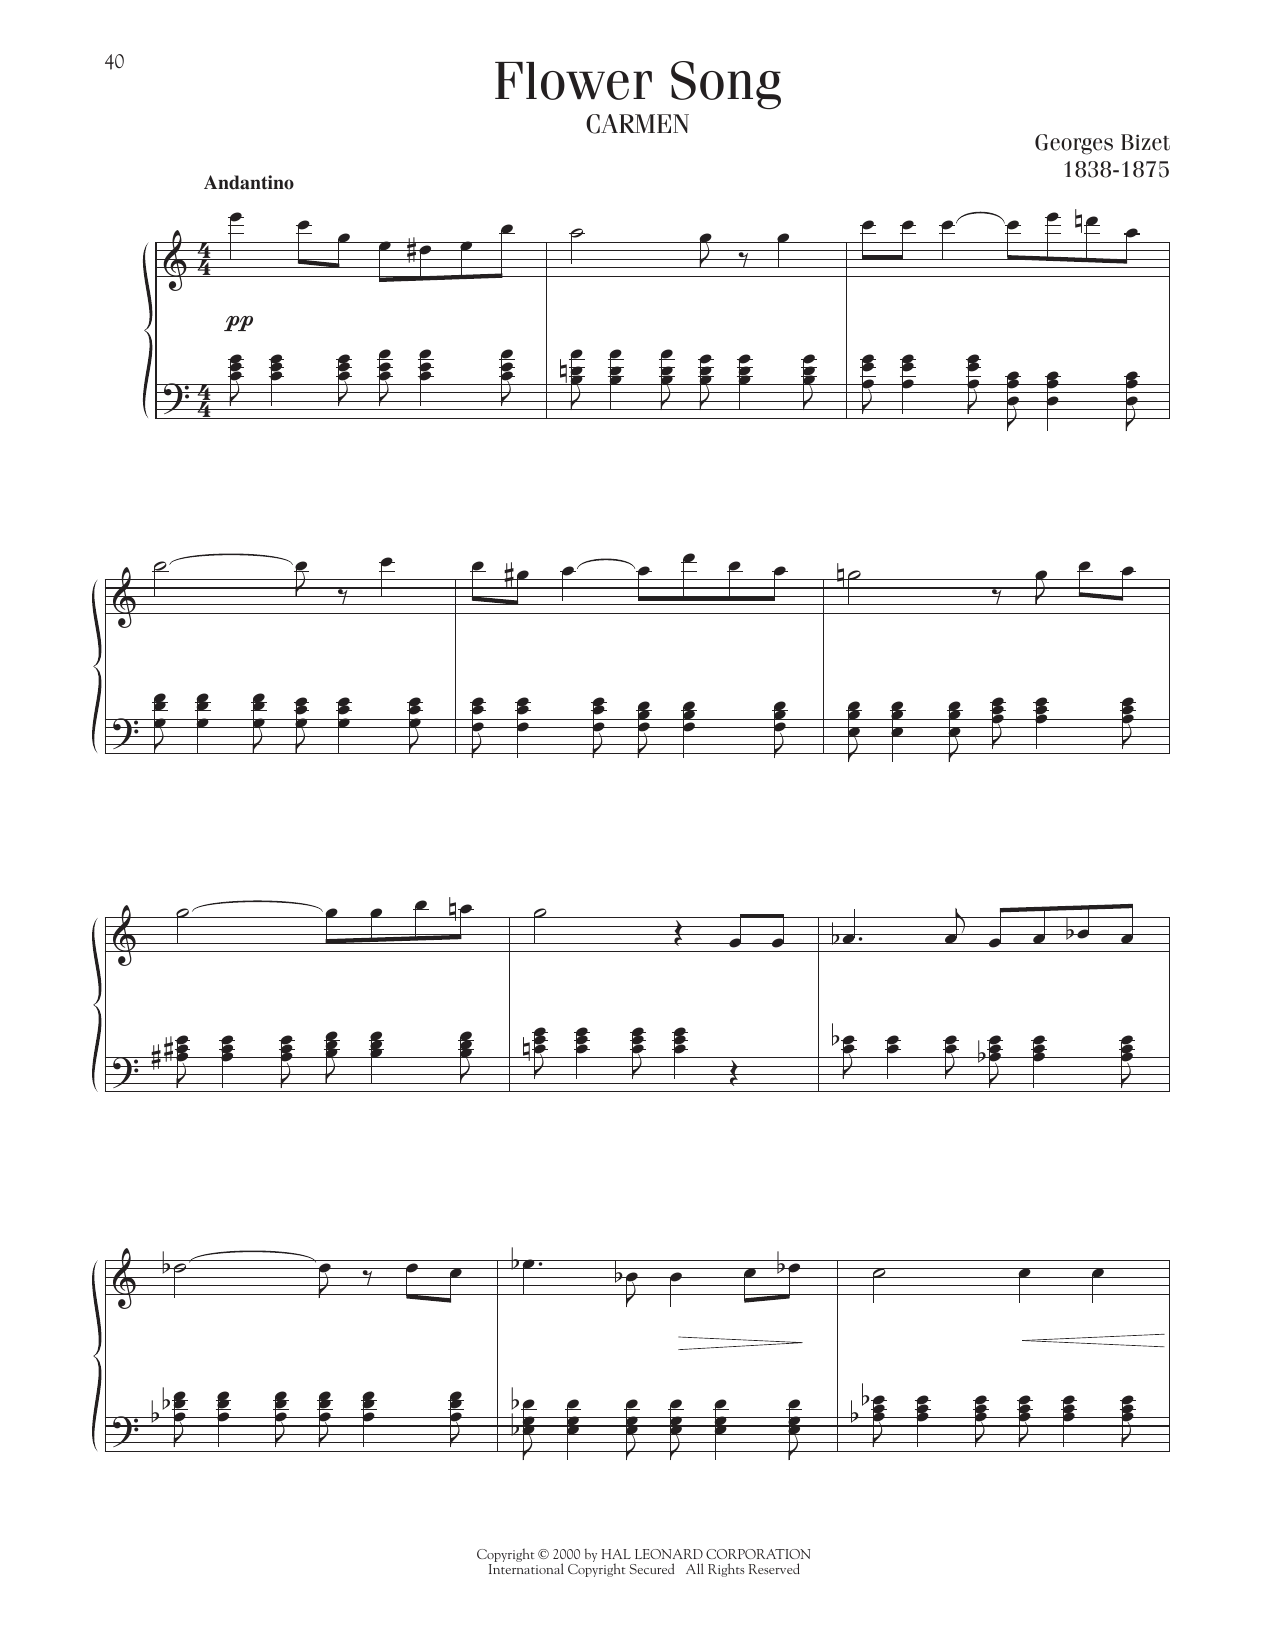 Georges Bizet Flower Song sheet music notes printable PDF score